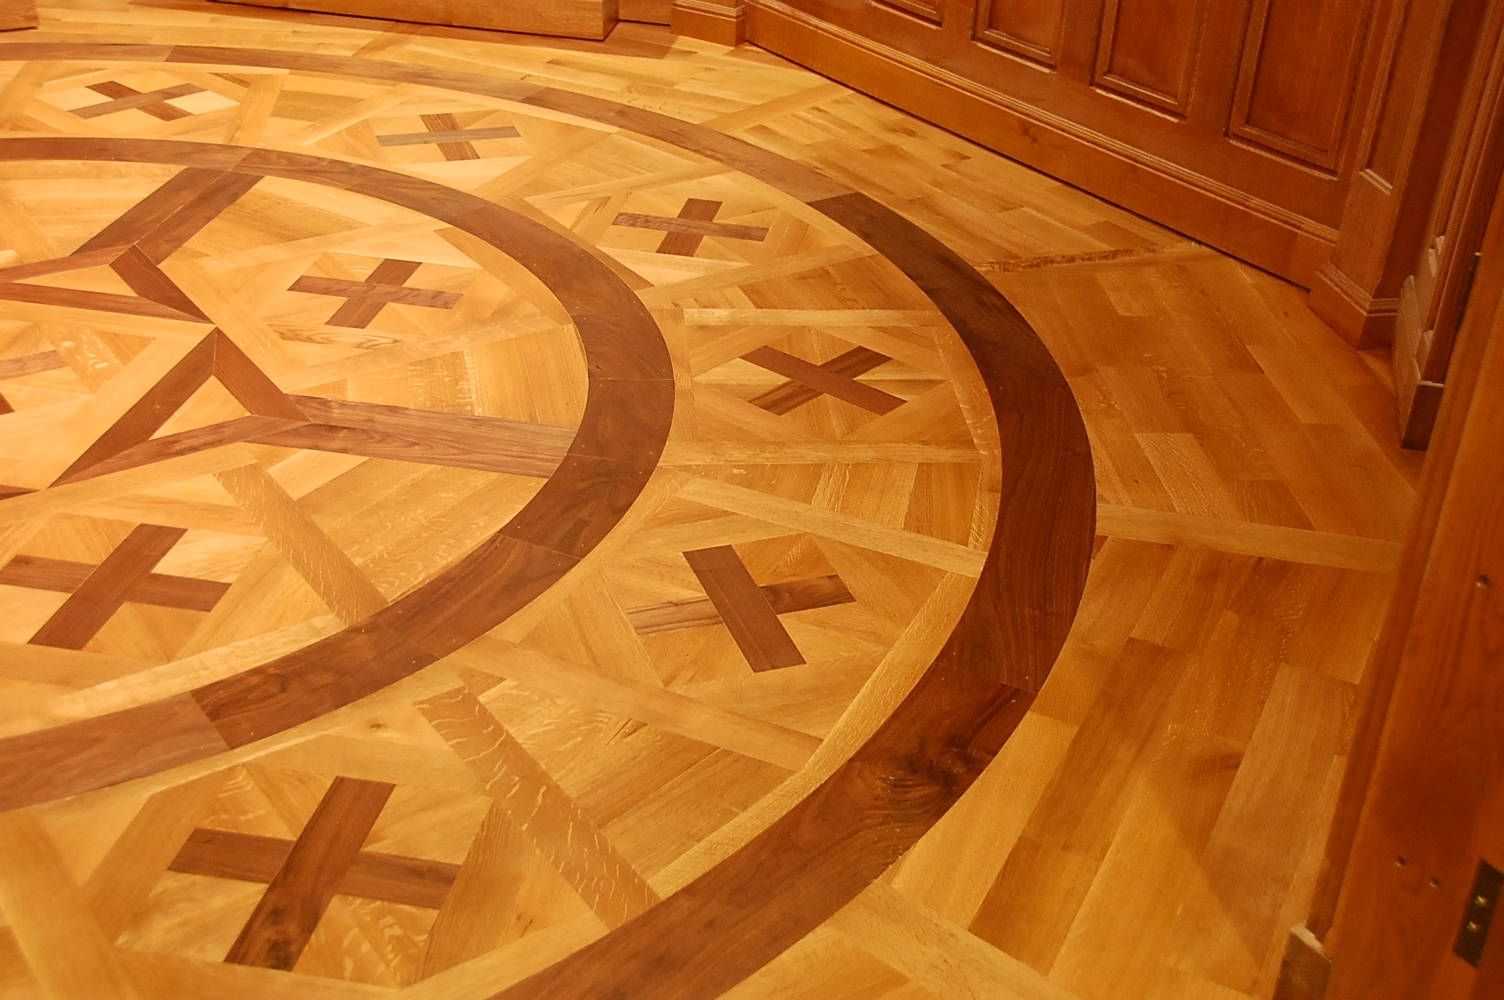 Custom Made Decorative Wood Floor Inlay By Corey Morgan Wood Works